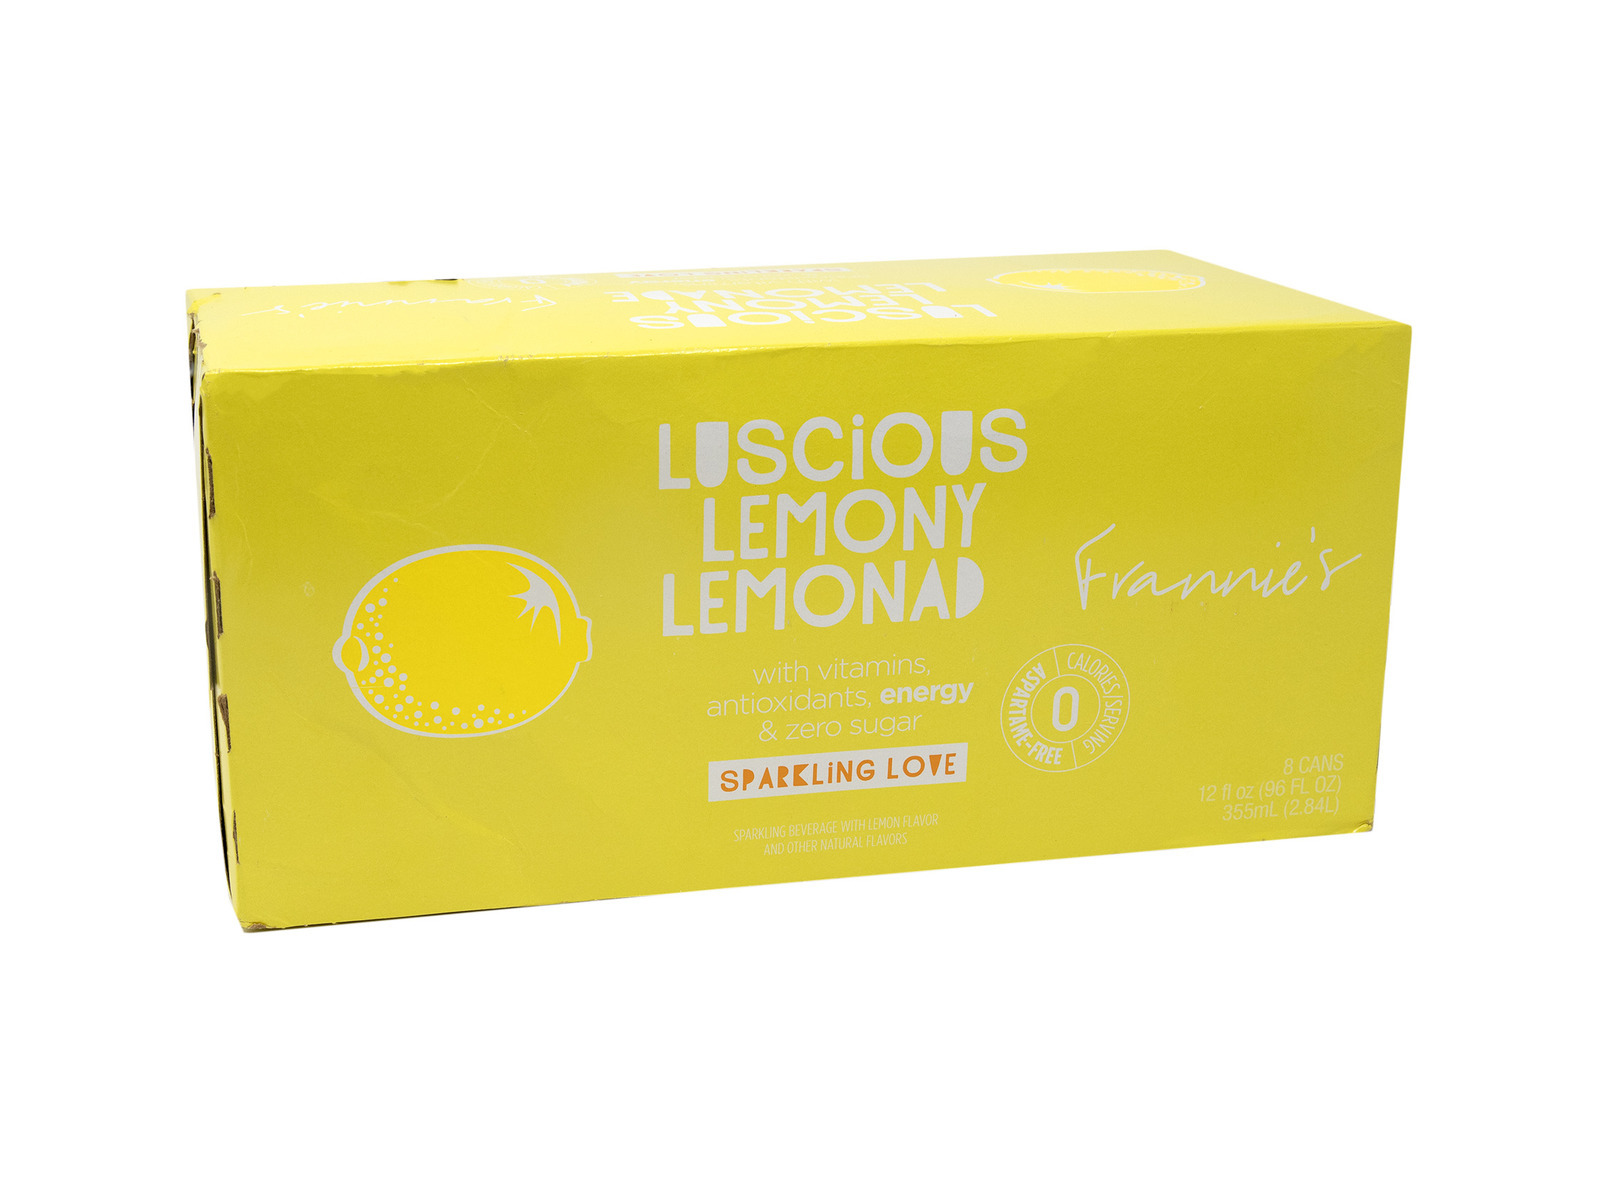 Luscious Lemony Lemonade 12oz CASE 8pk Frannies